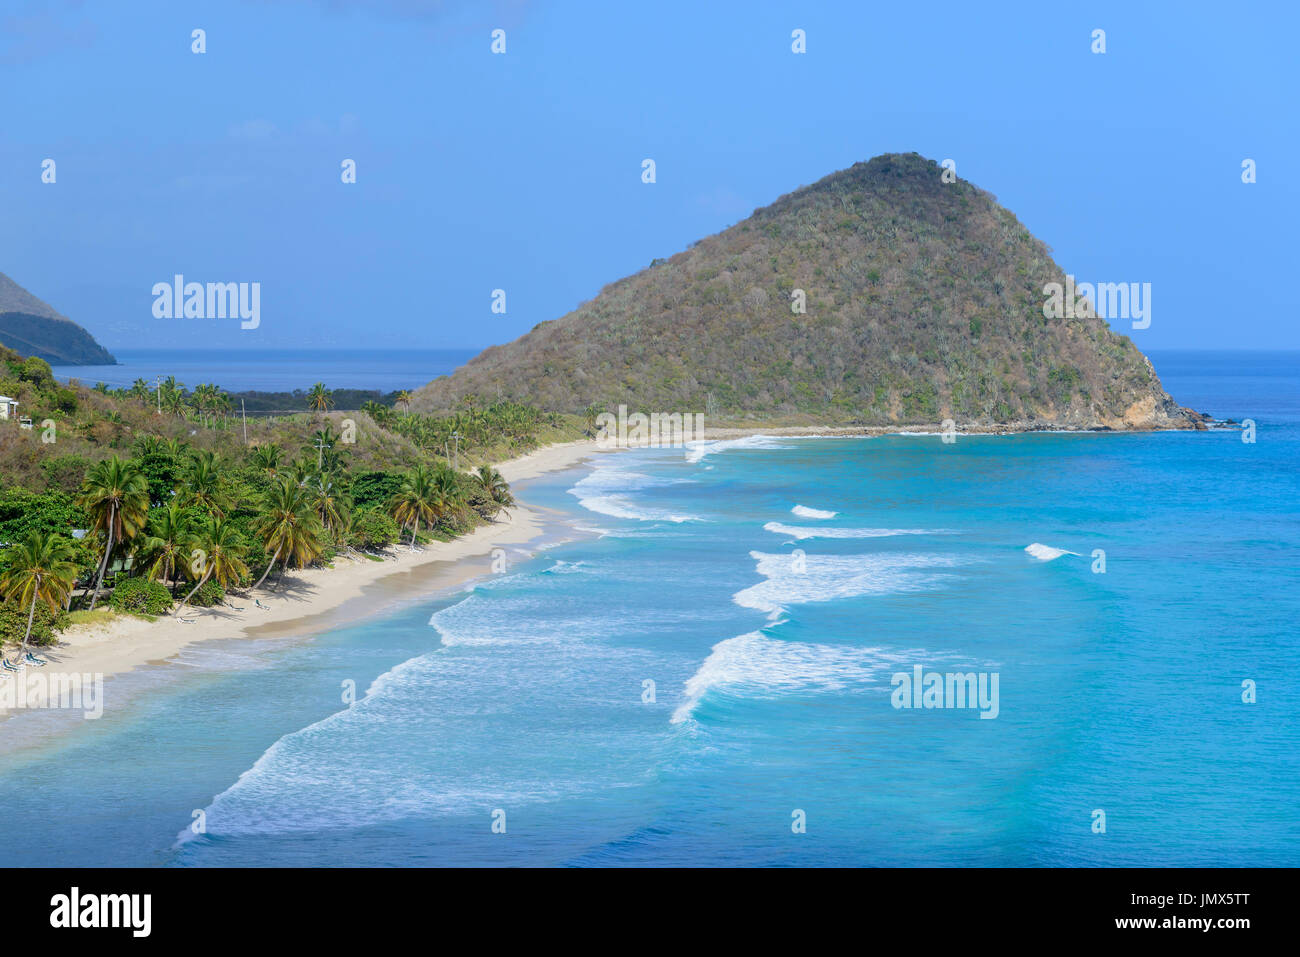 Beach at Long Bay Beach Club, Tortola Island, British Virgin Islands, Caribbean Sea Stock Photo